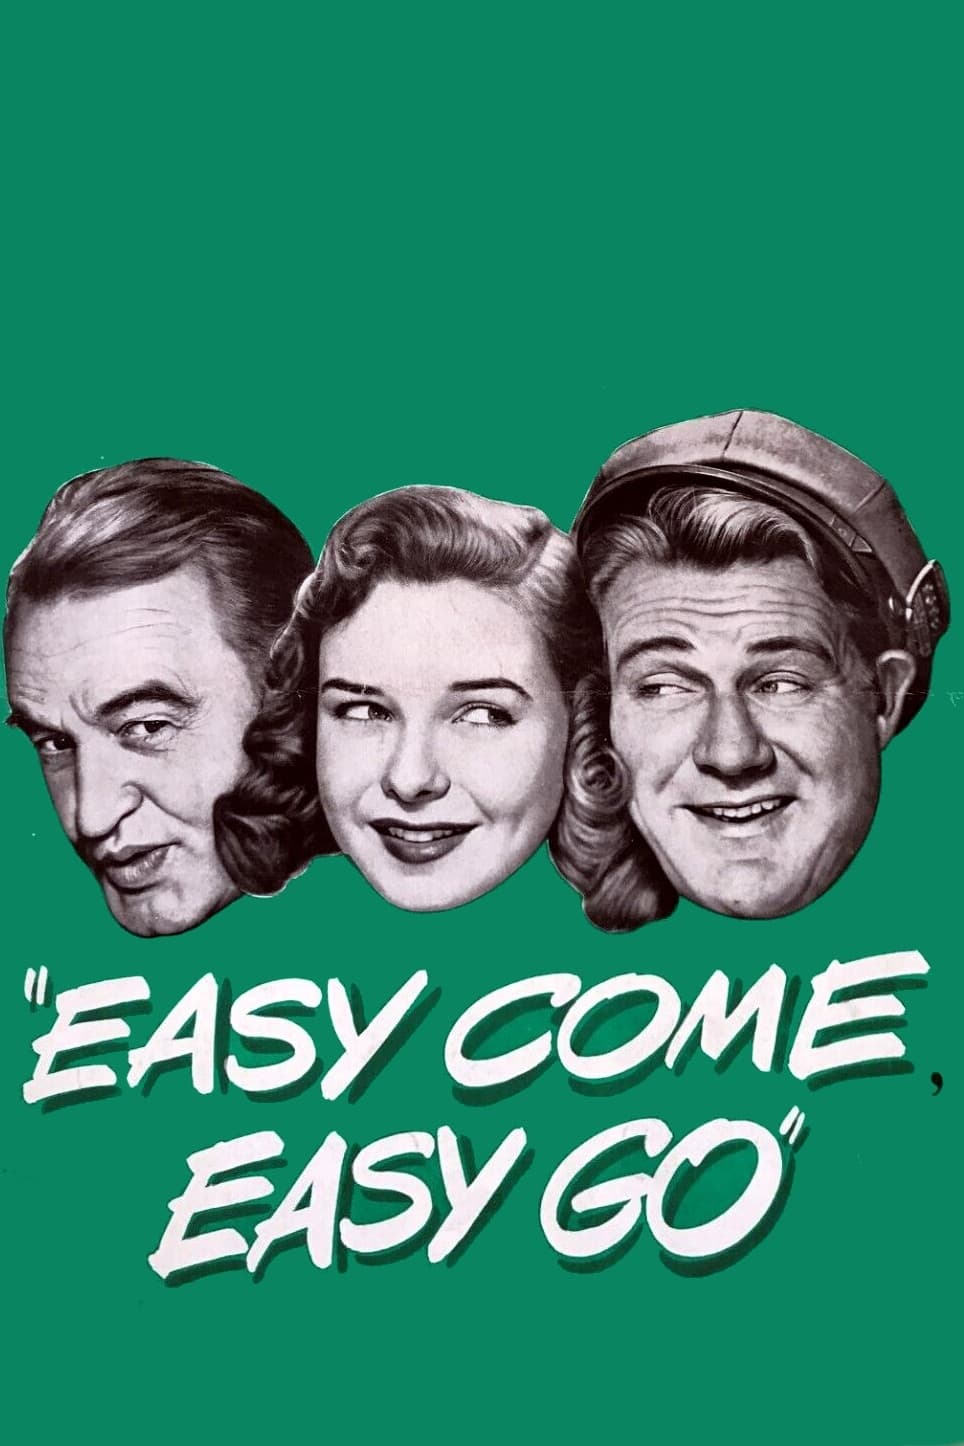 Easy Come, Easy Go (1947)